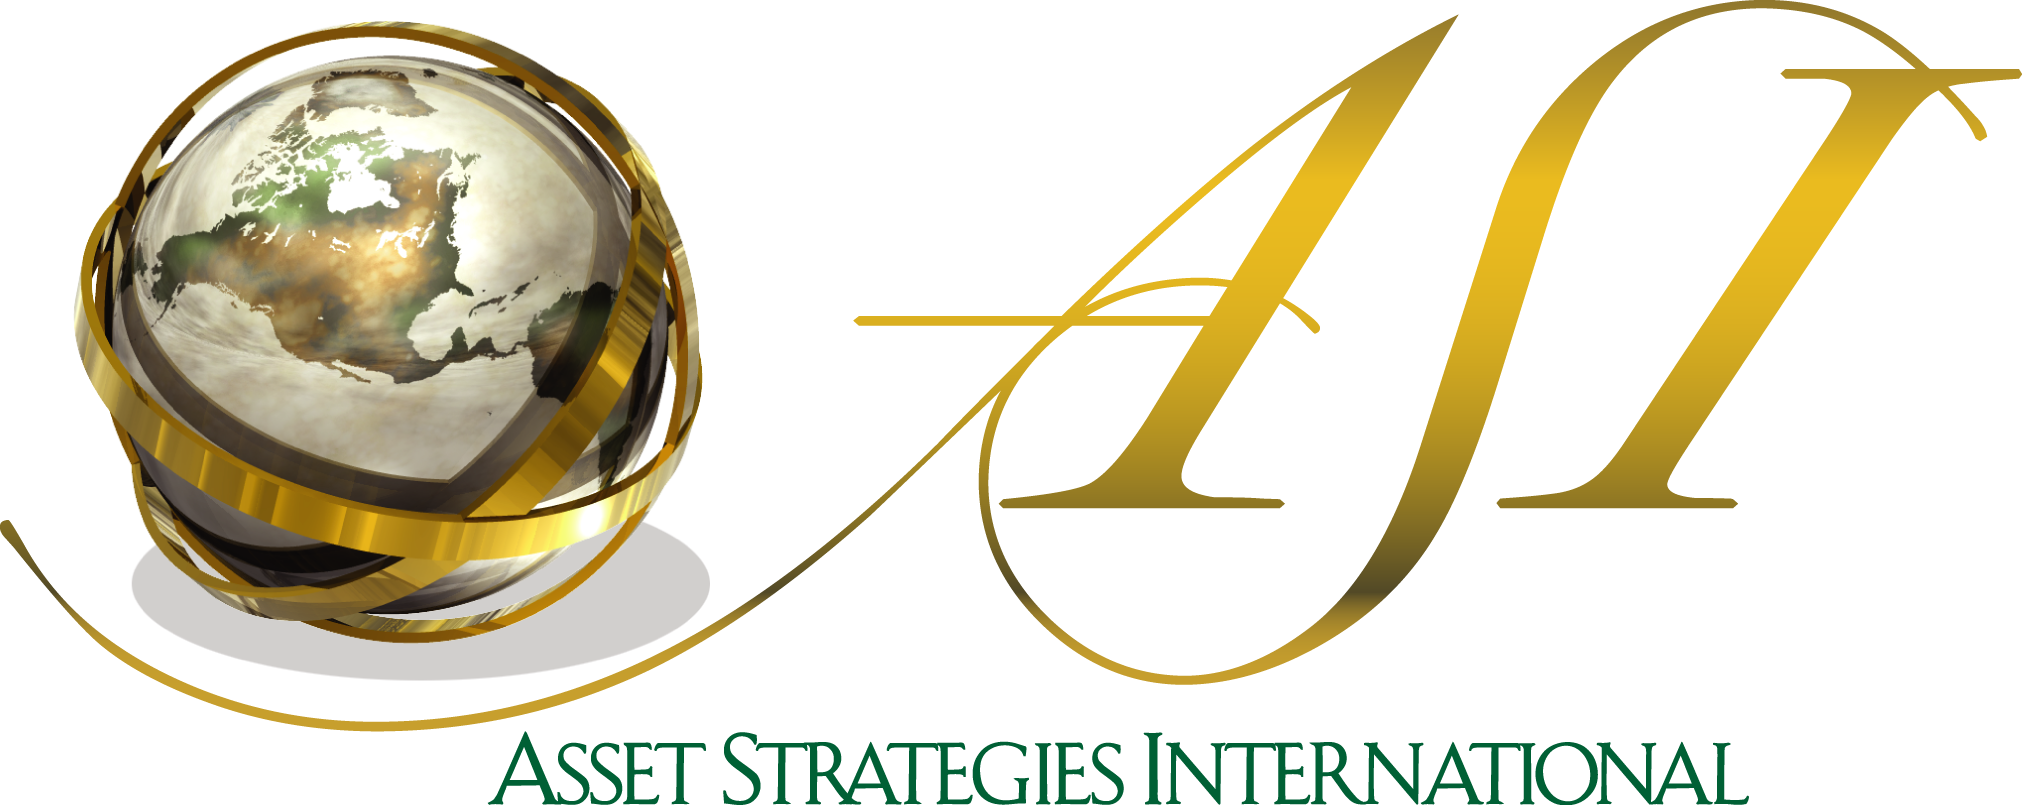 asset strategies international